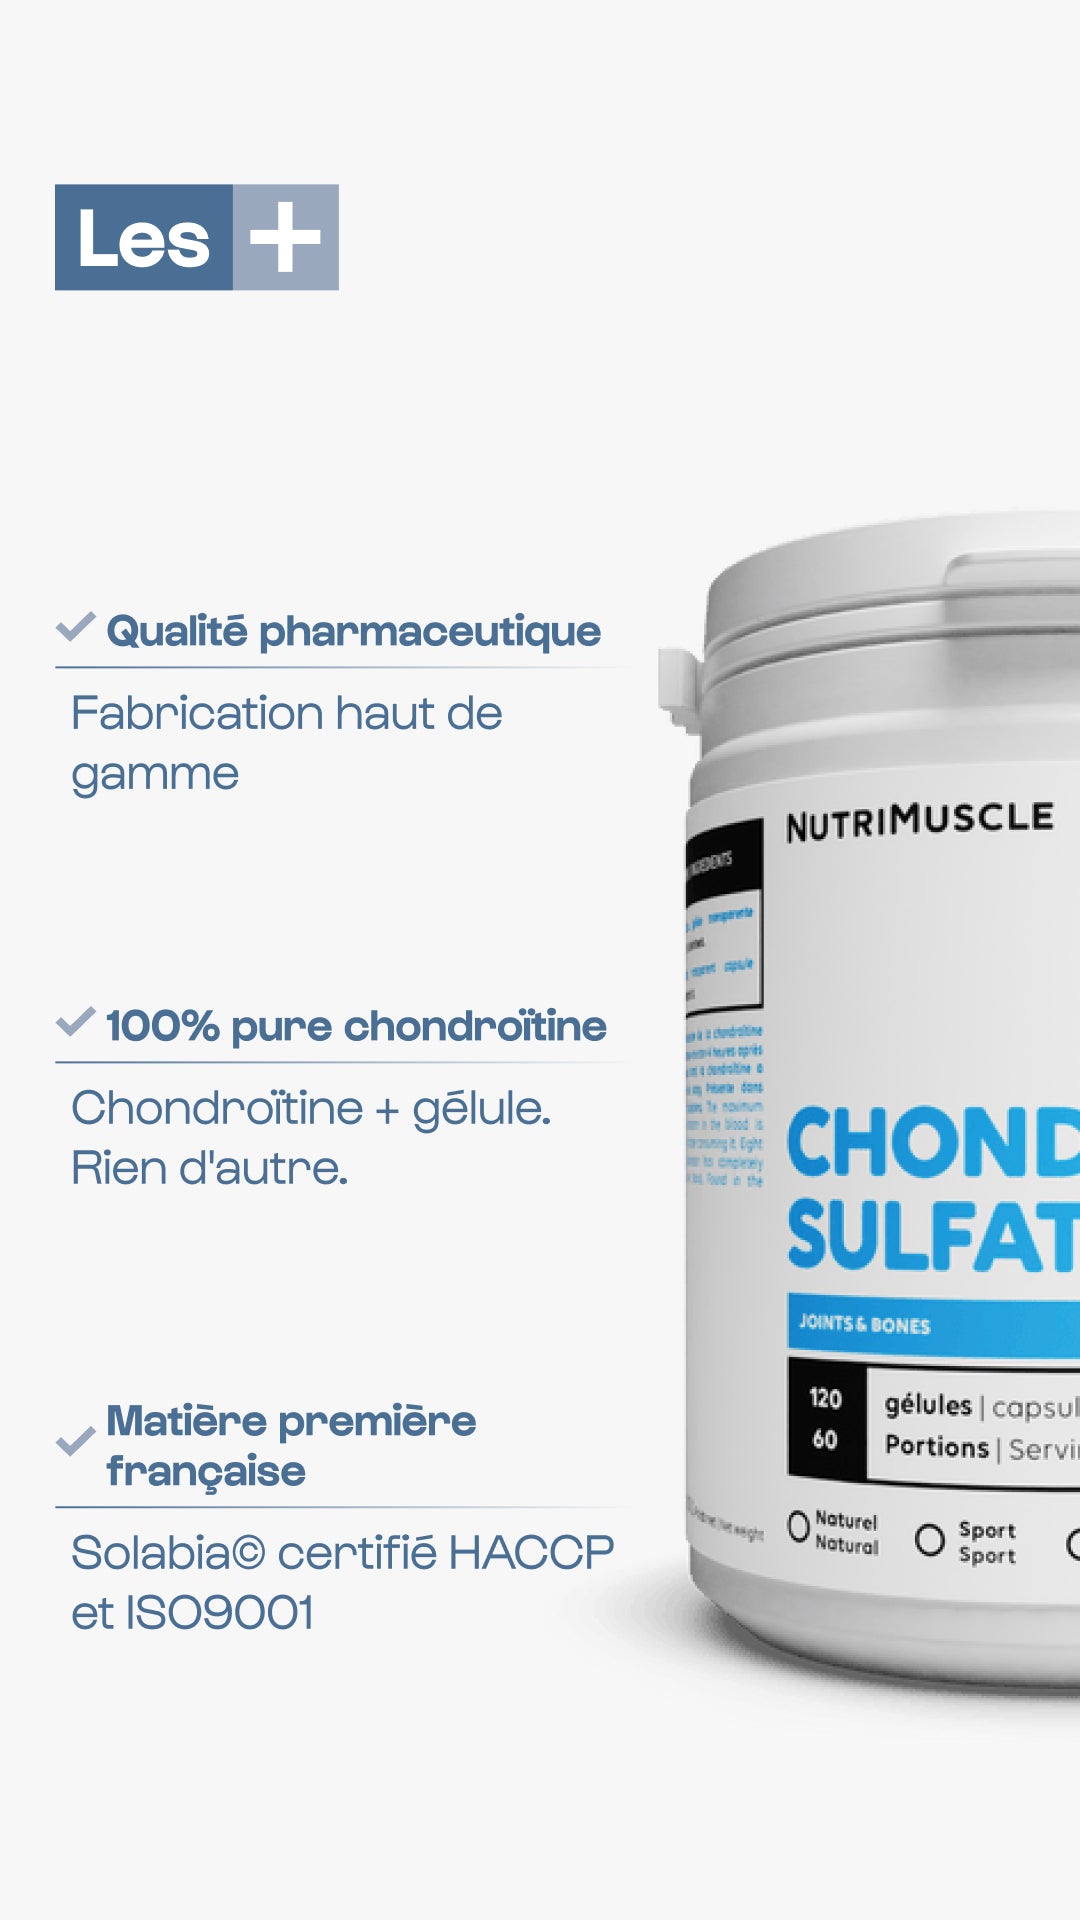 Chondroitine sulfate in capsules